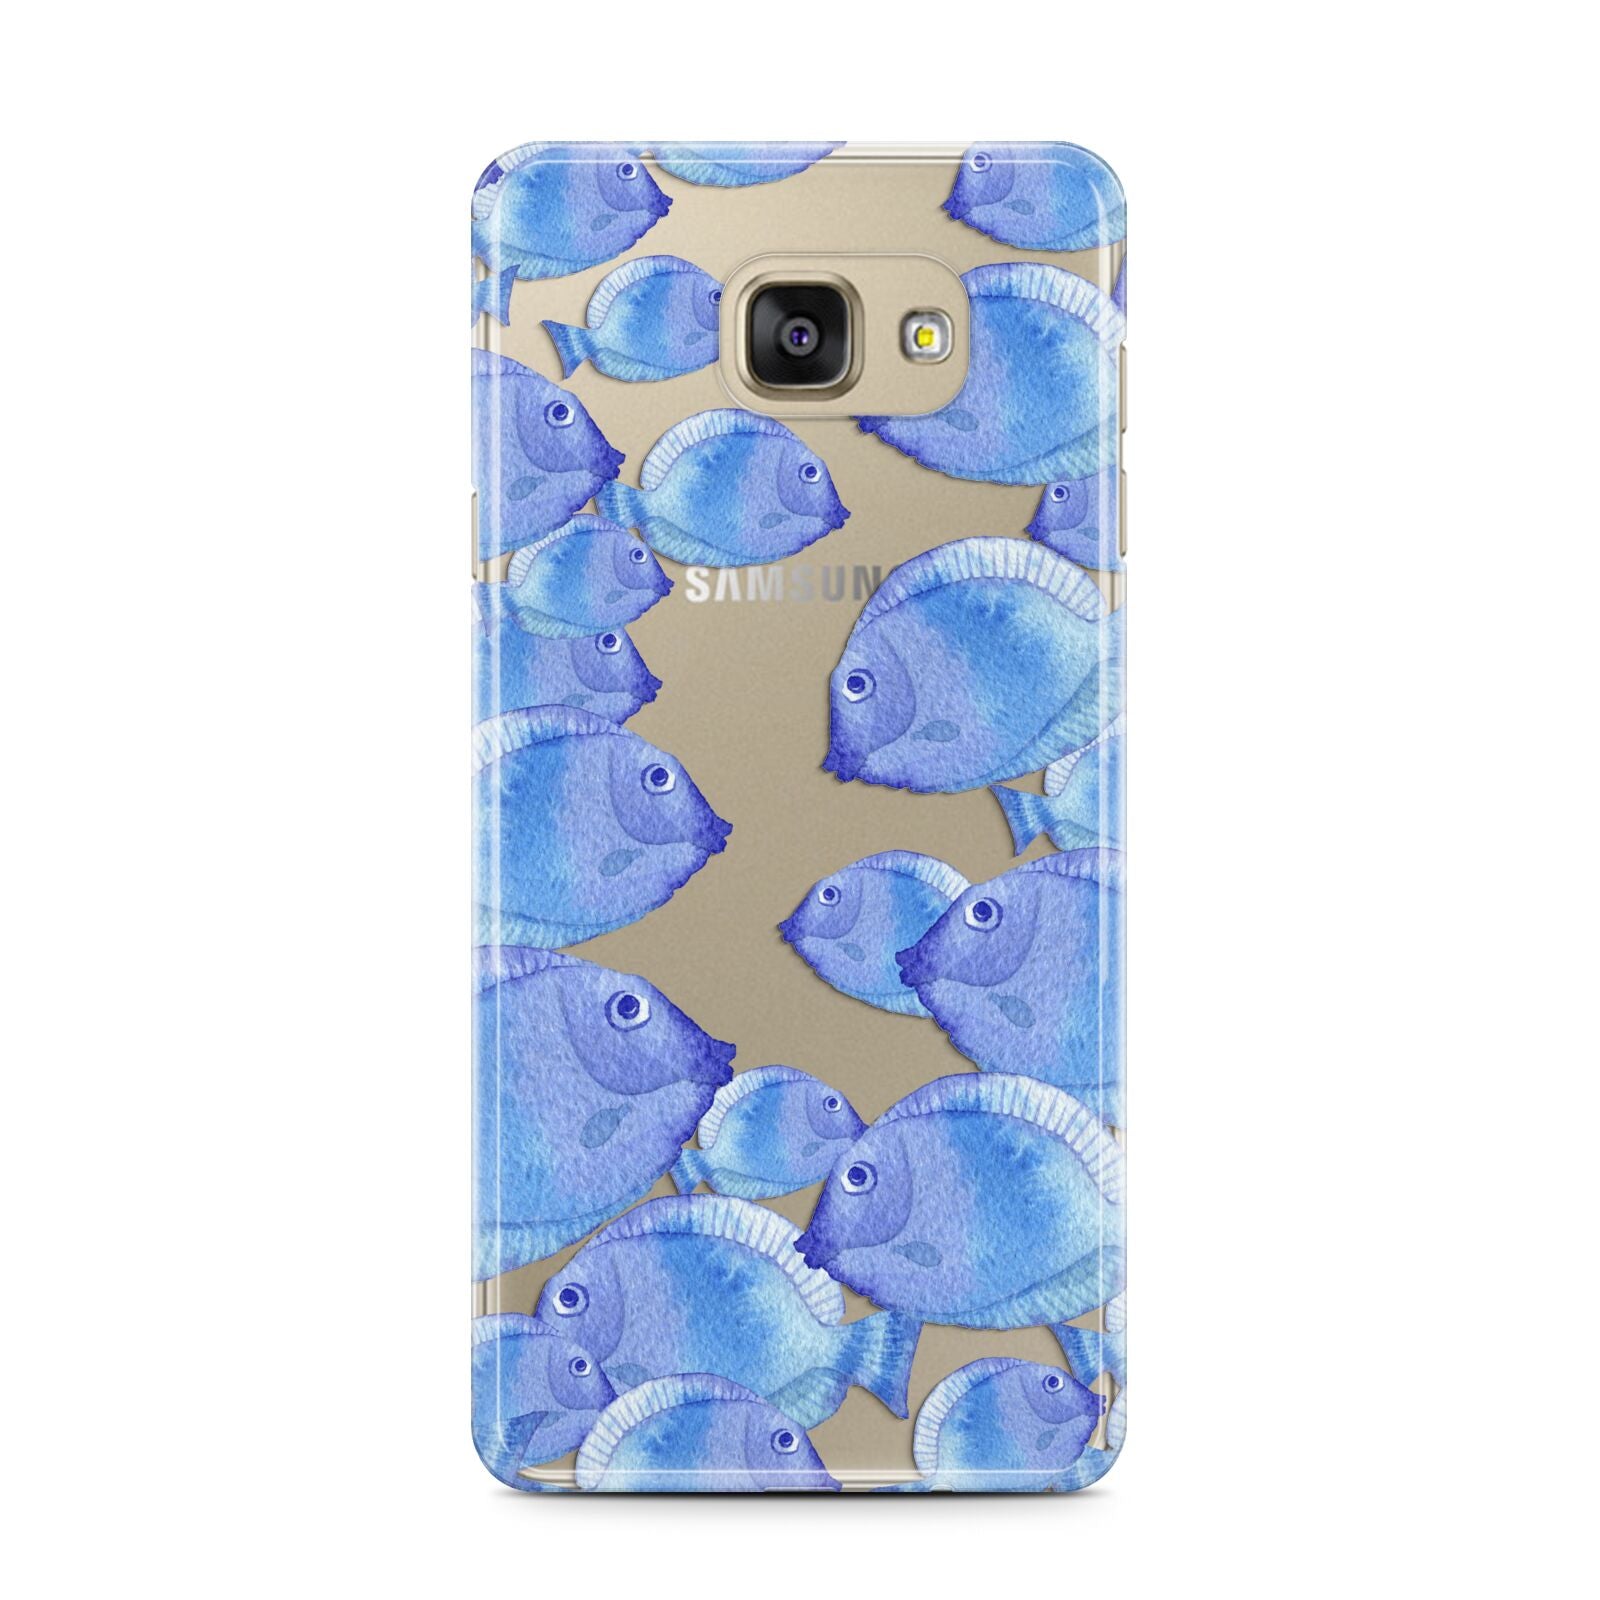 Fish Samsung Galaxy A7 2016 Case on gold phone